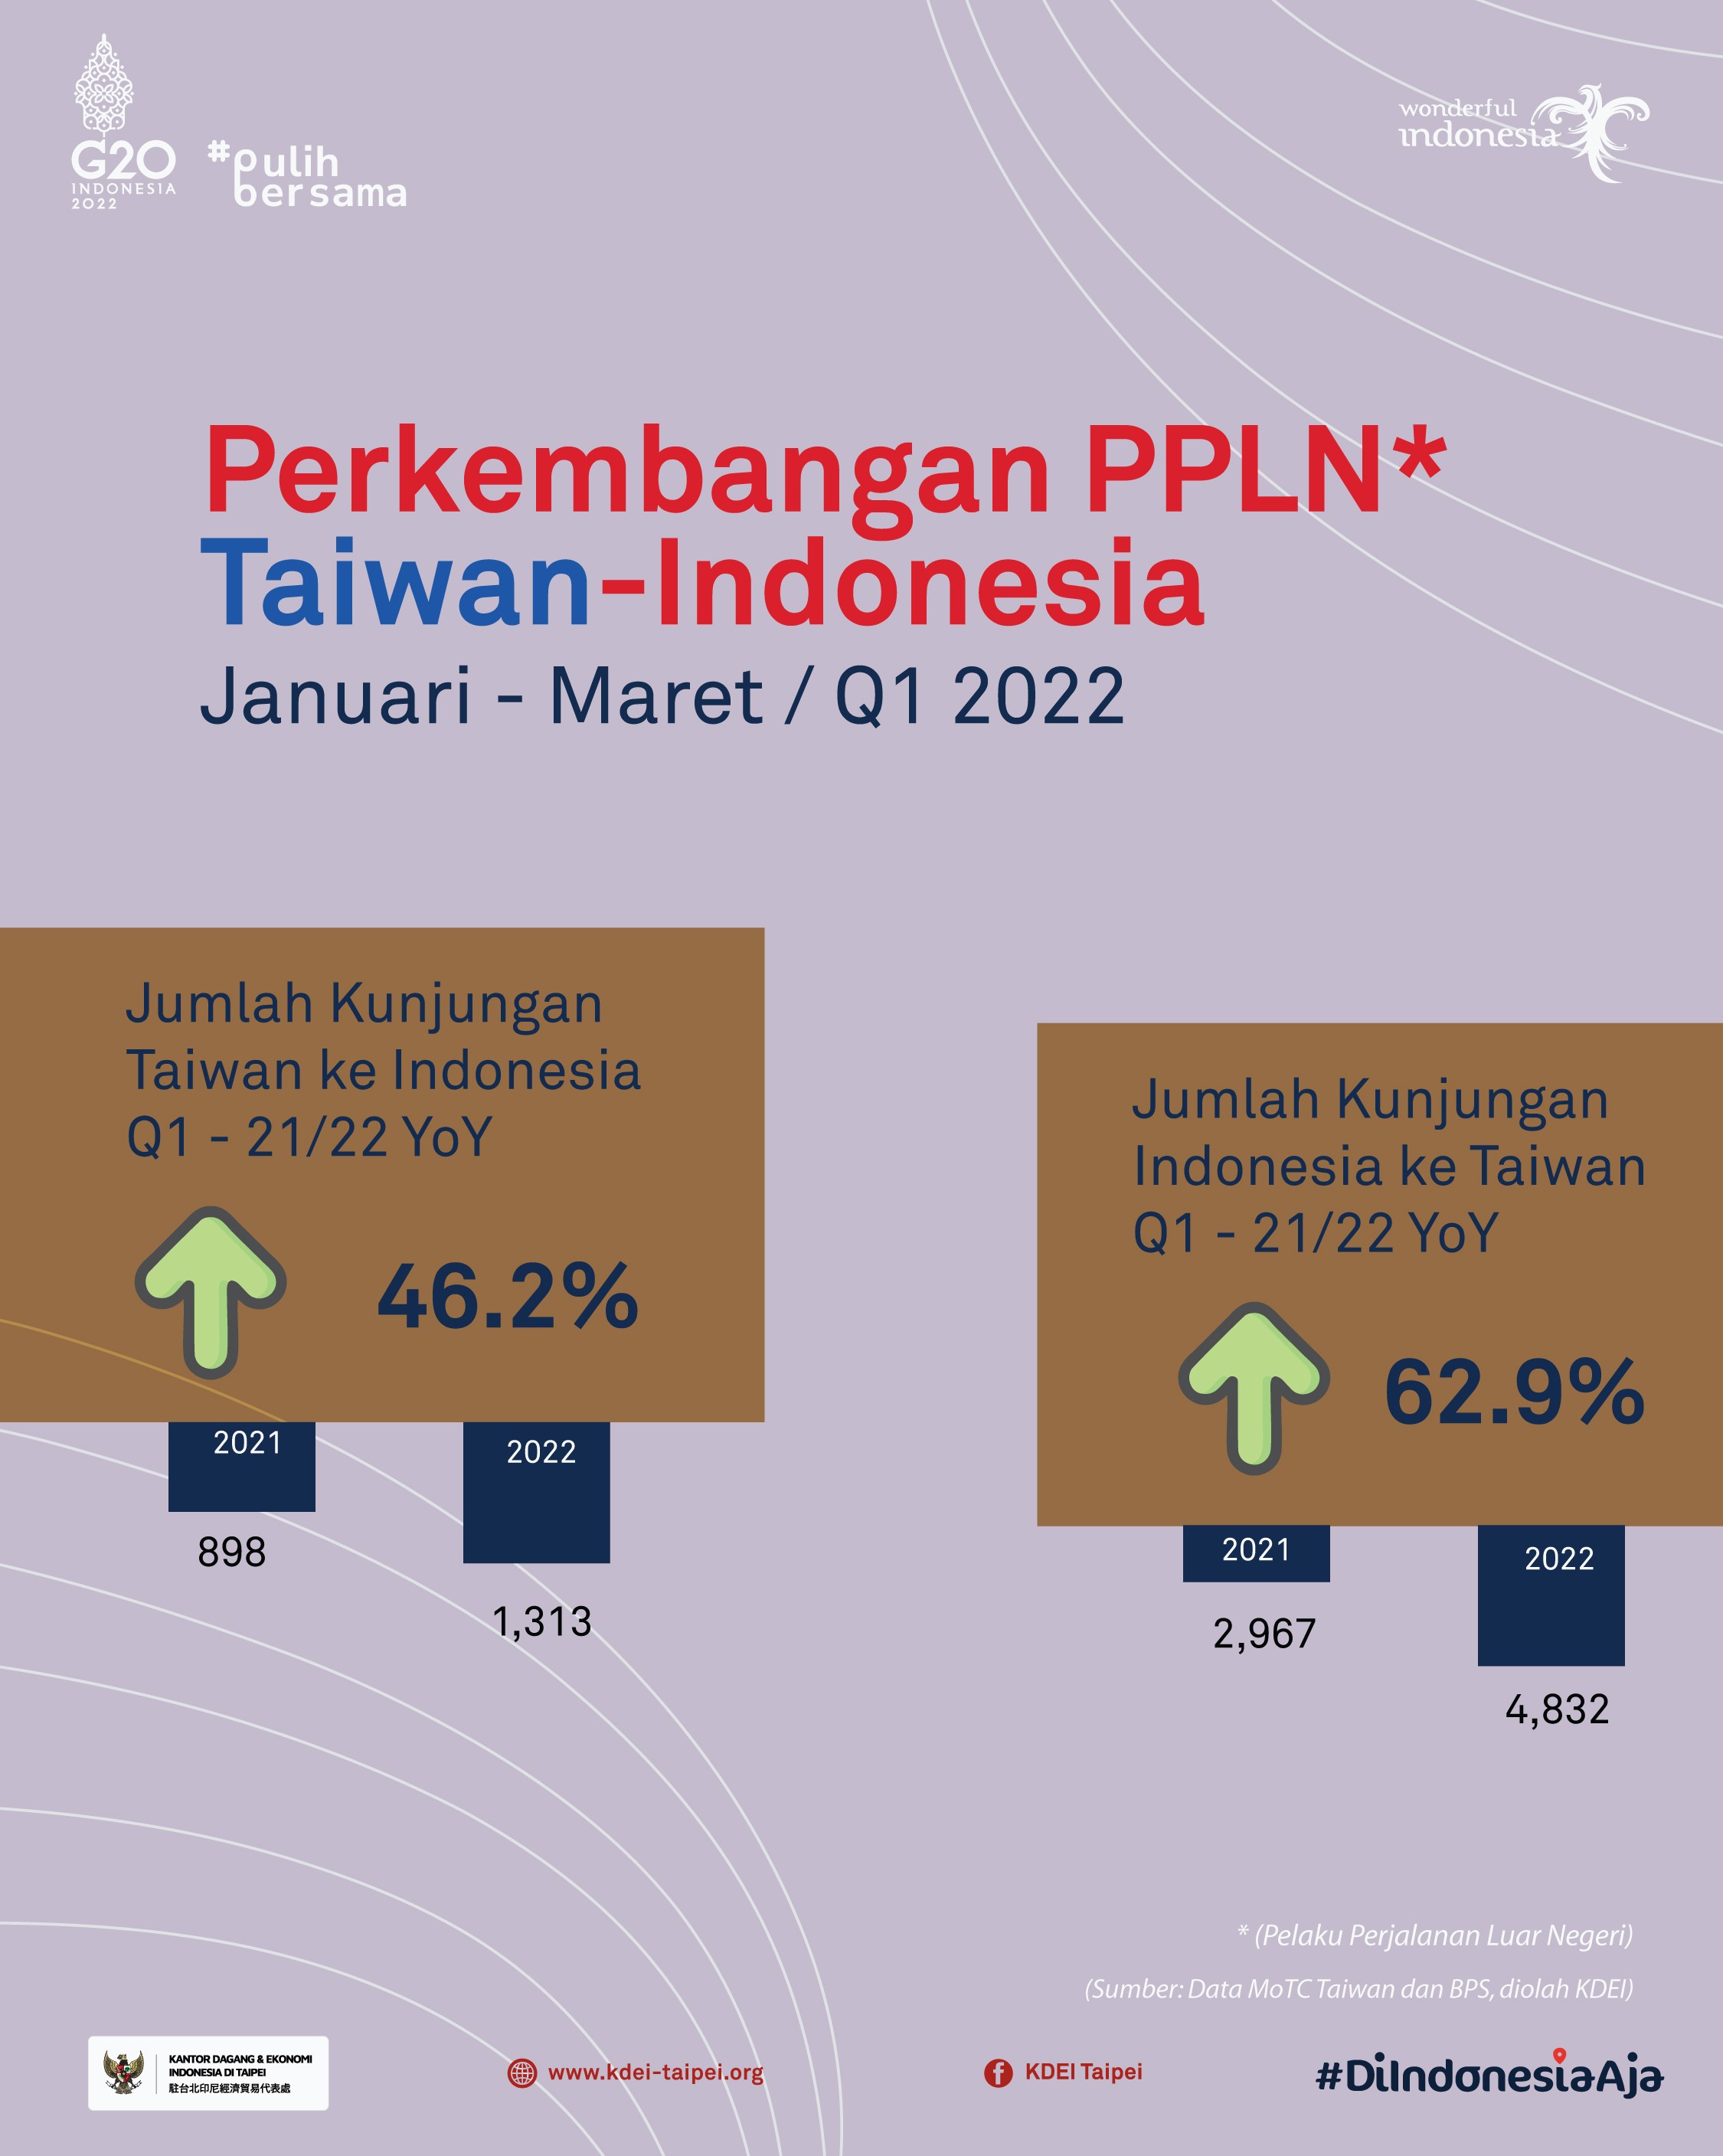 PERKEMBANGAN PPLN TAIWAN - INDONESIA PERIODE KUARTAL 1 - 2022